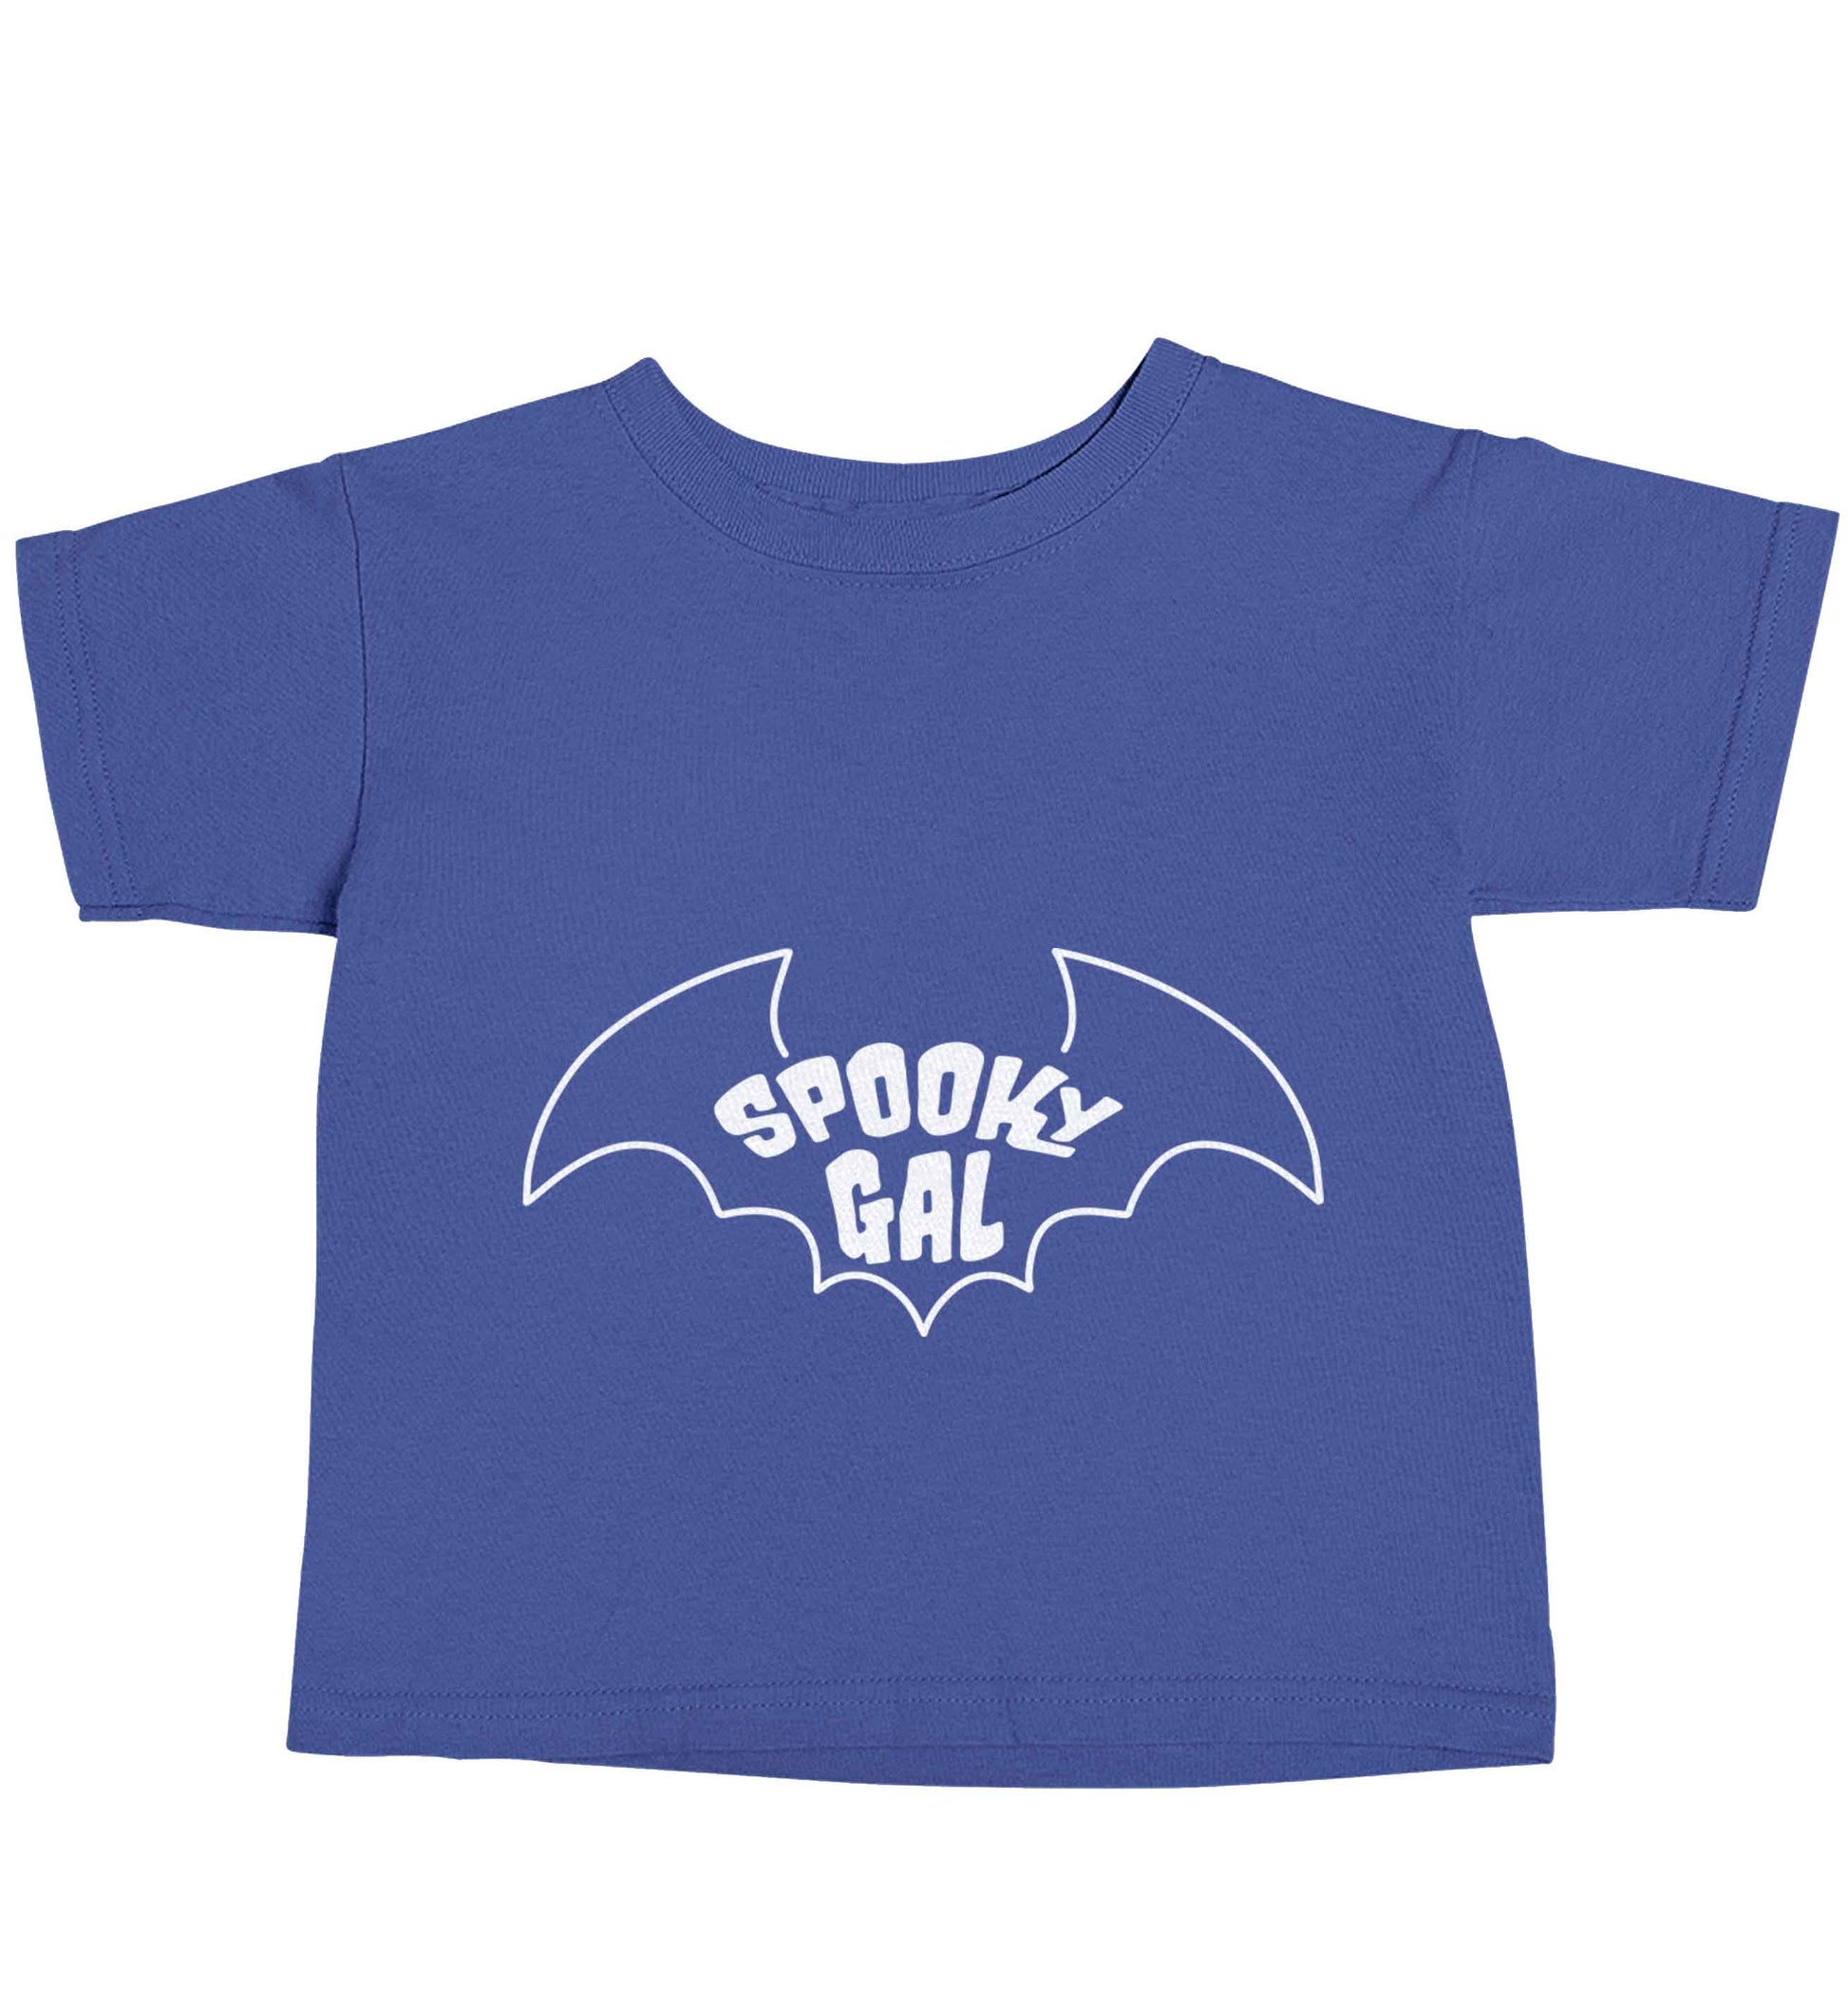 Spooky gal Kit blue baby toddler Tshirt 2 Years